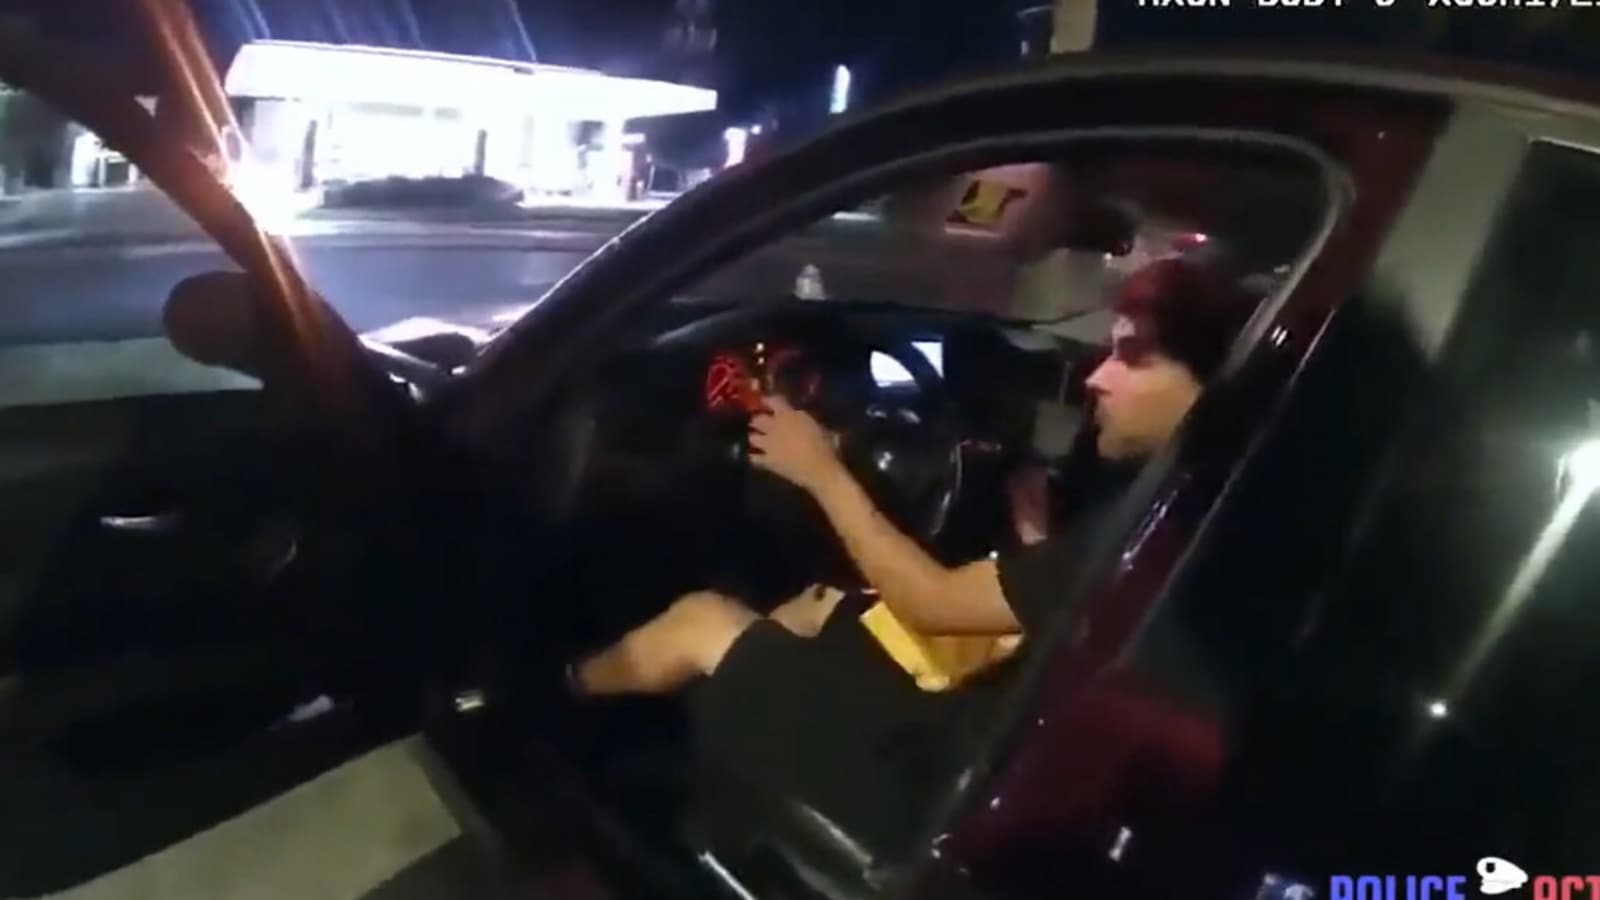 video-shows-us-cop-firing-at-teenager-eating-hamburger-in-car-sacked